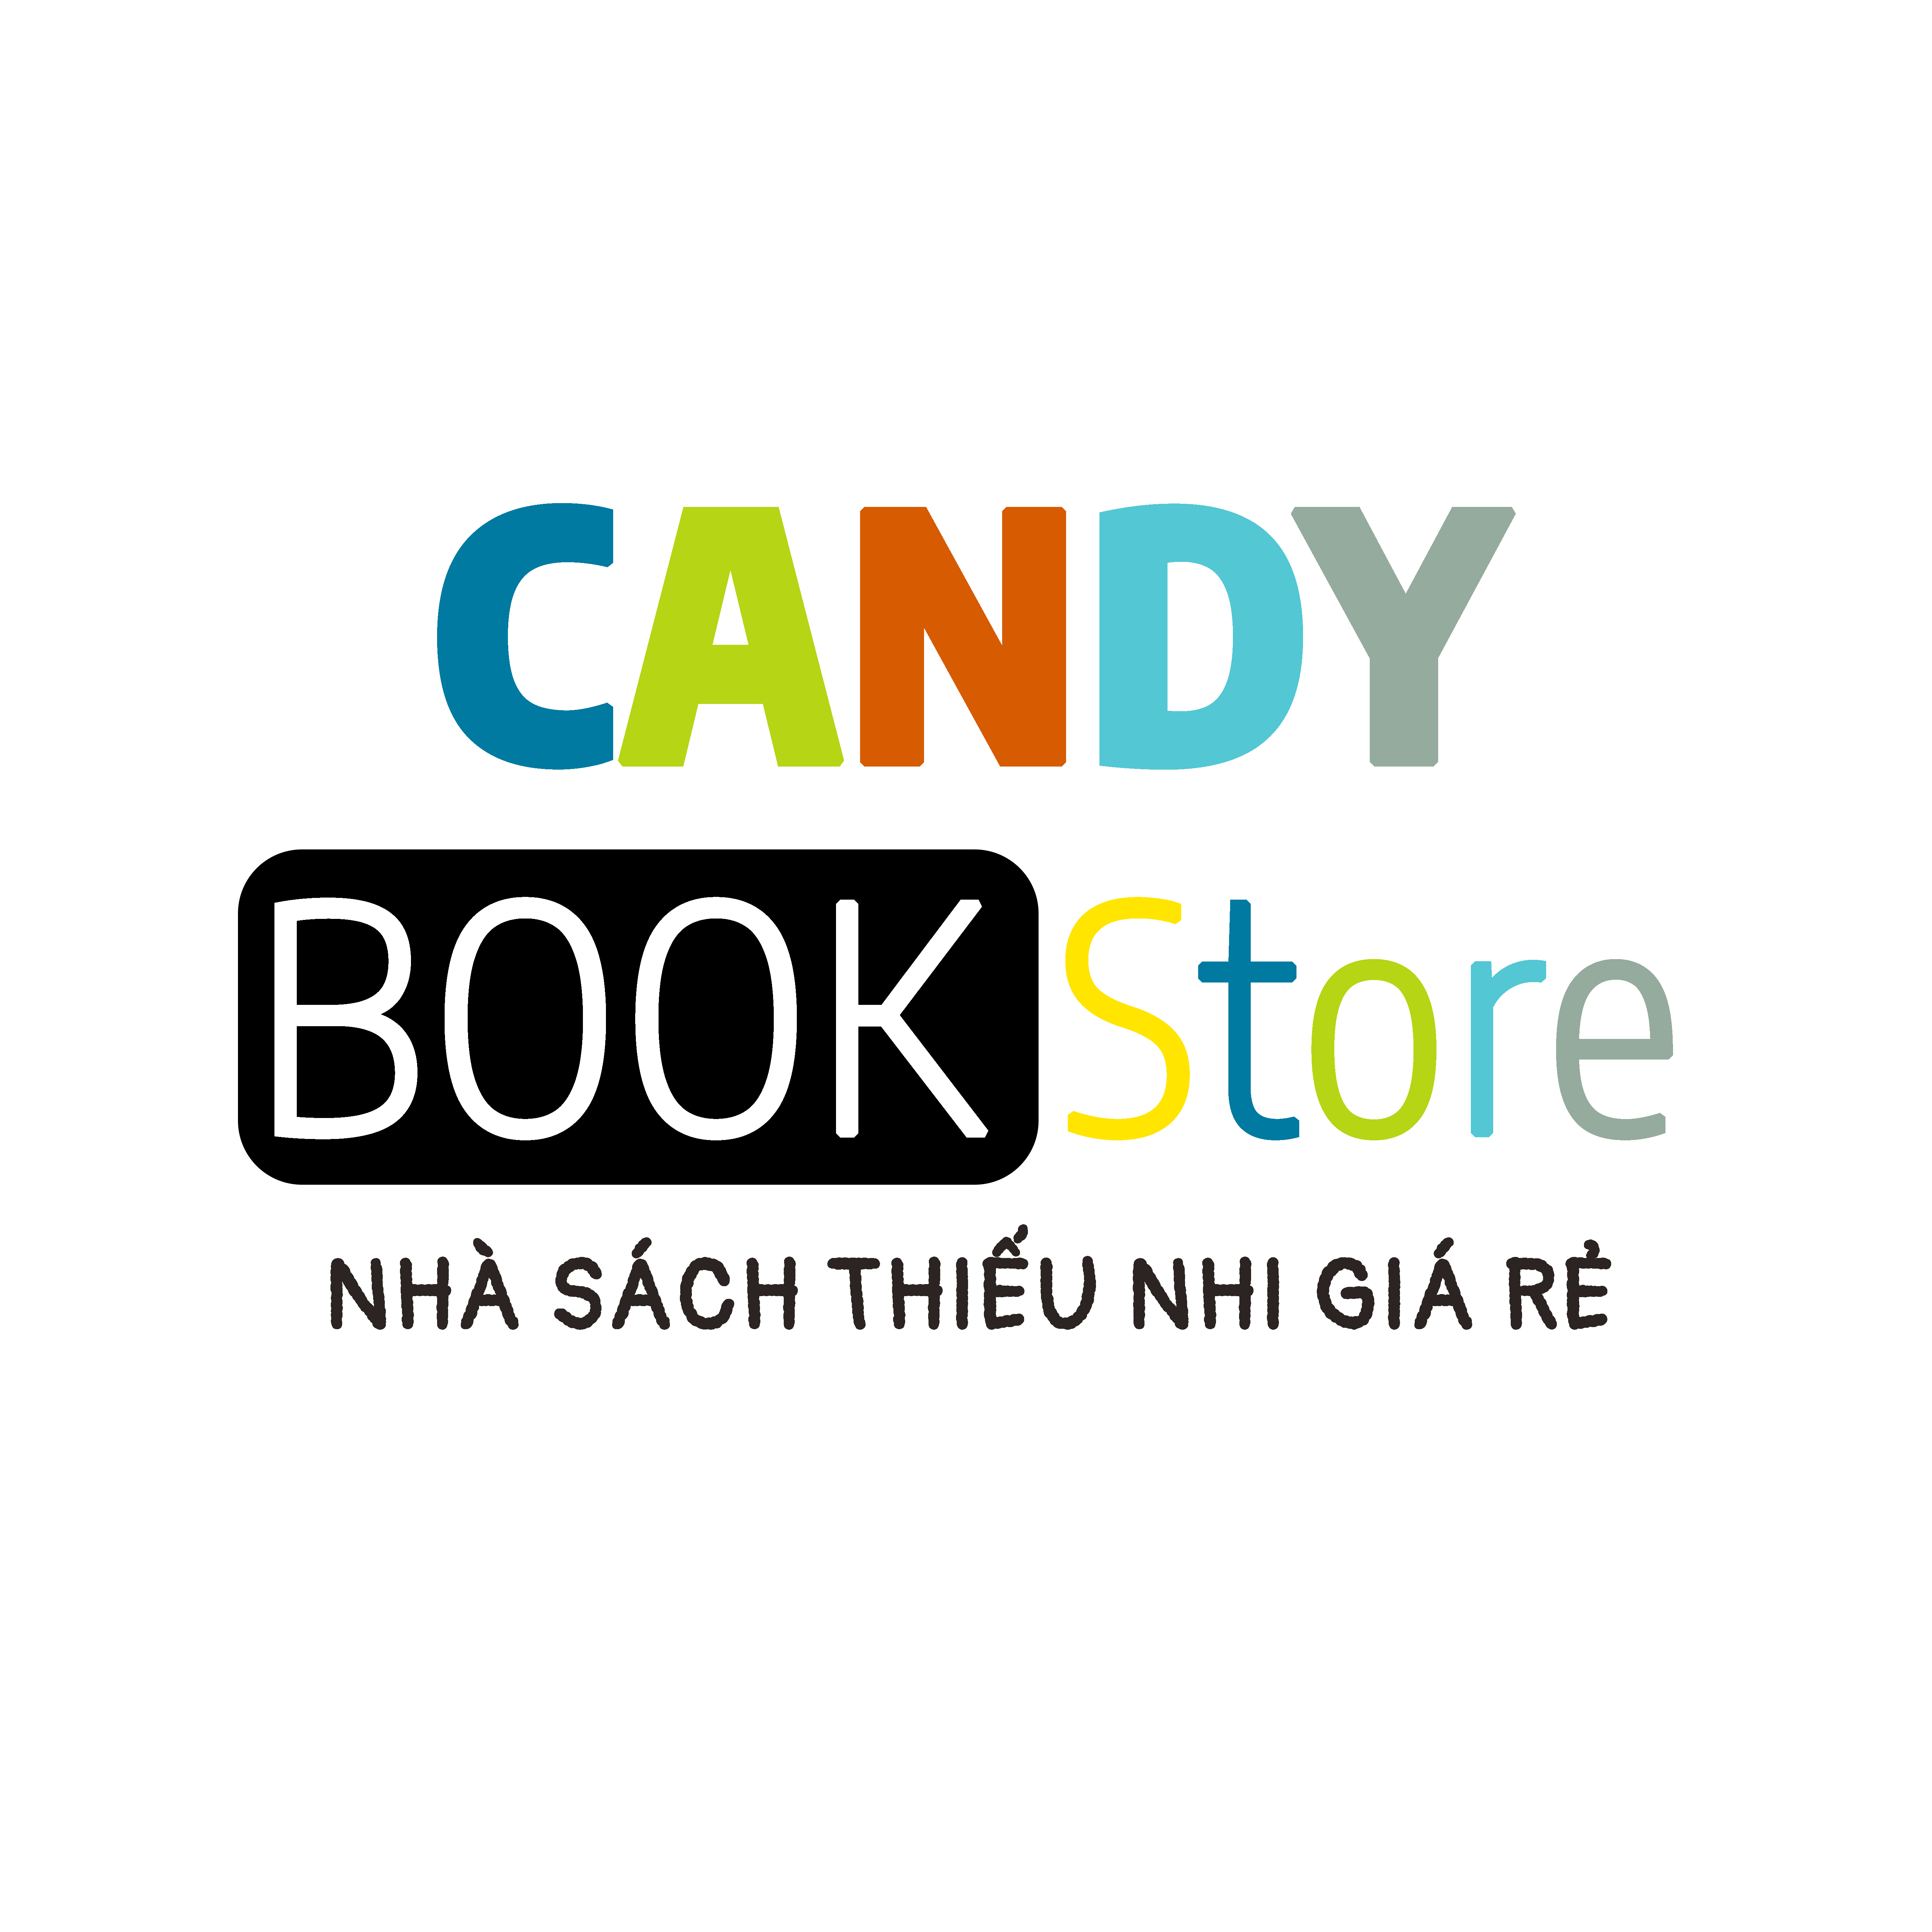 Candybookstore